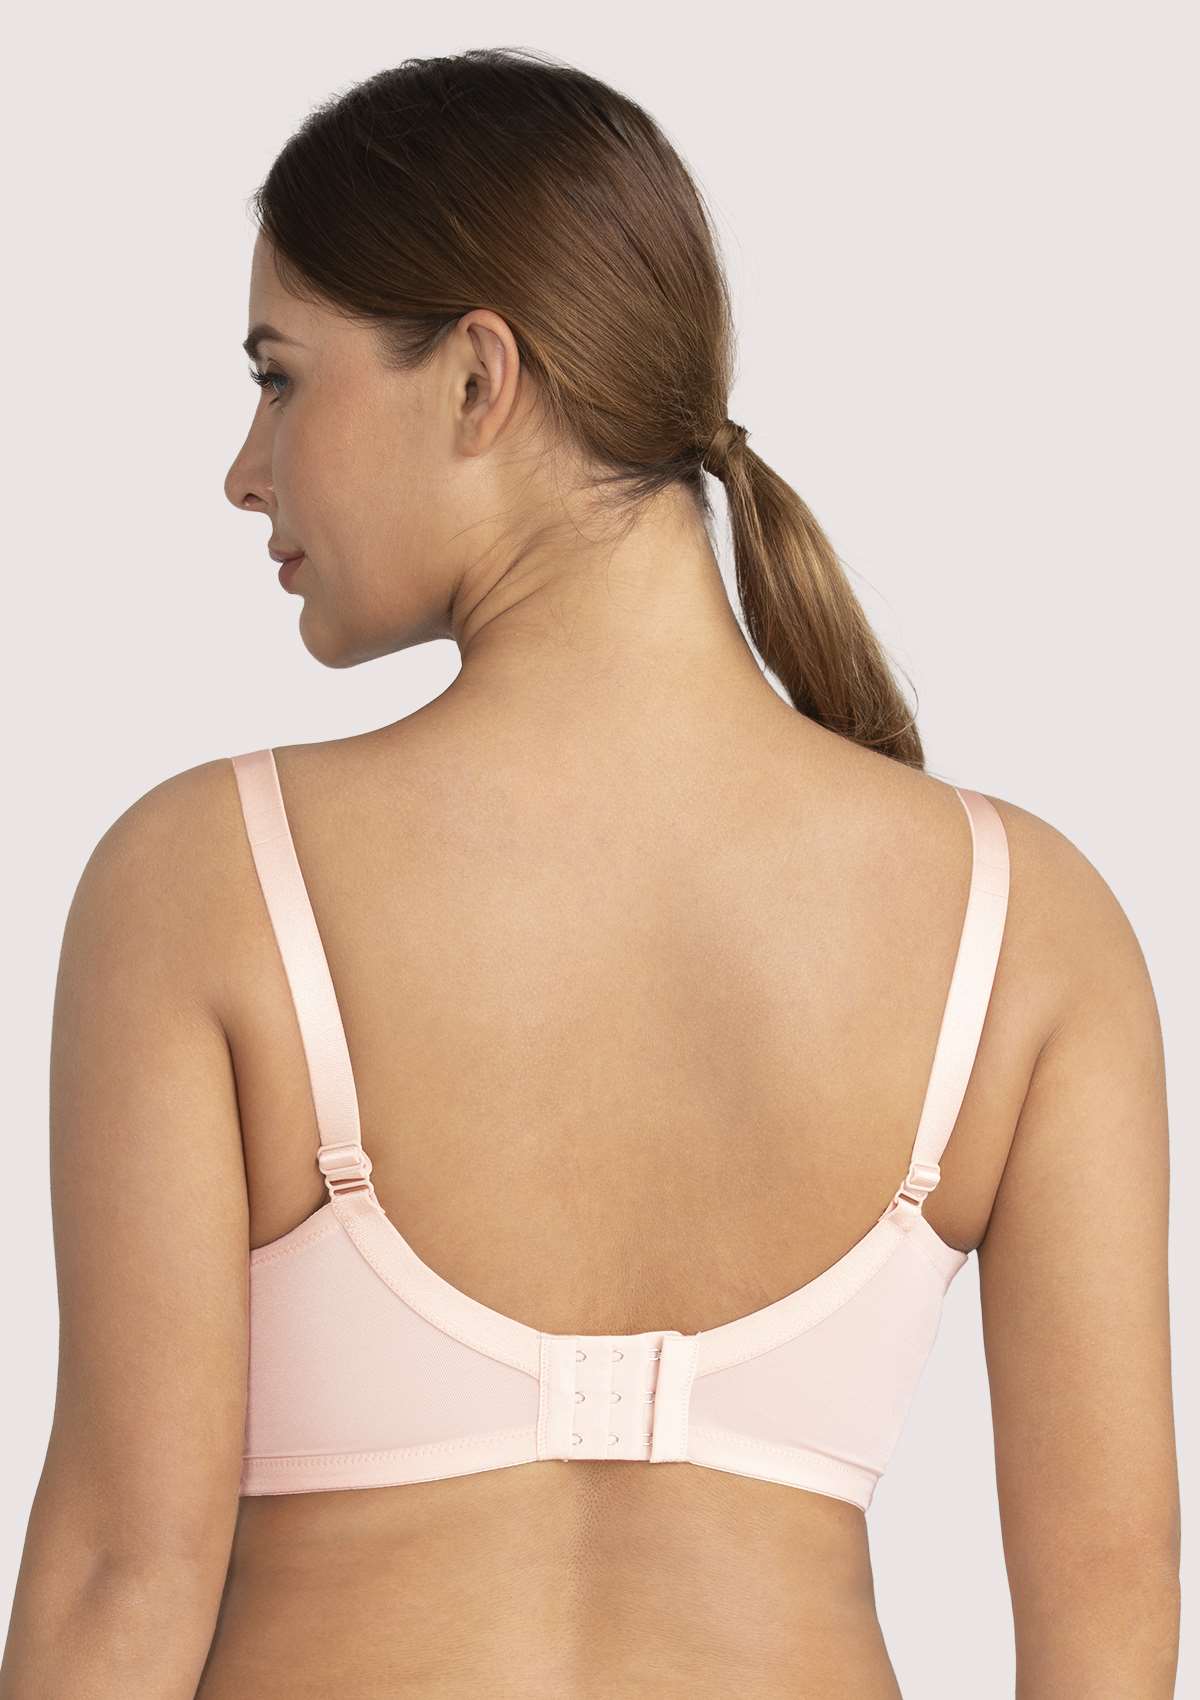 HSIA Sunflower Matching Bra And Panties Set: Comfortable Plus Size Bra - Pink / 36 / DD/E